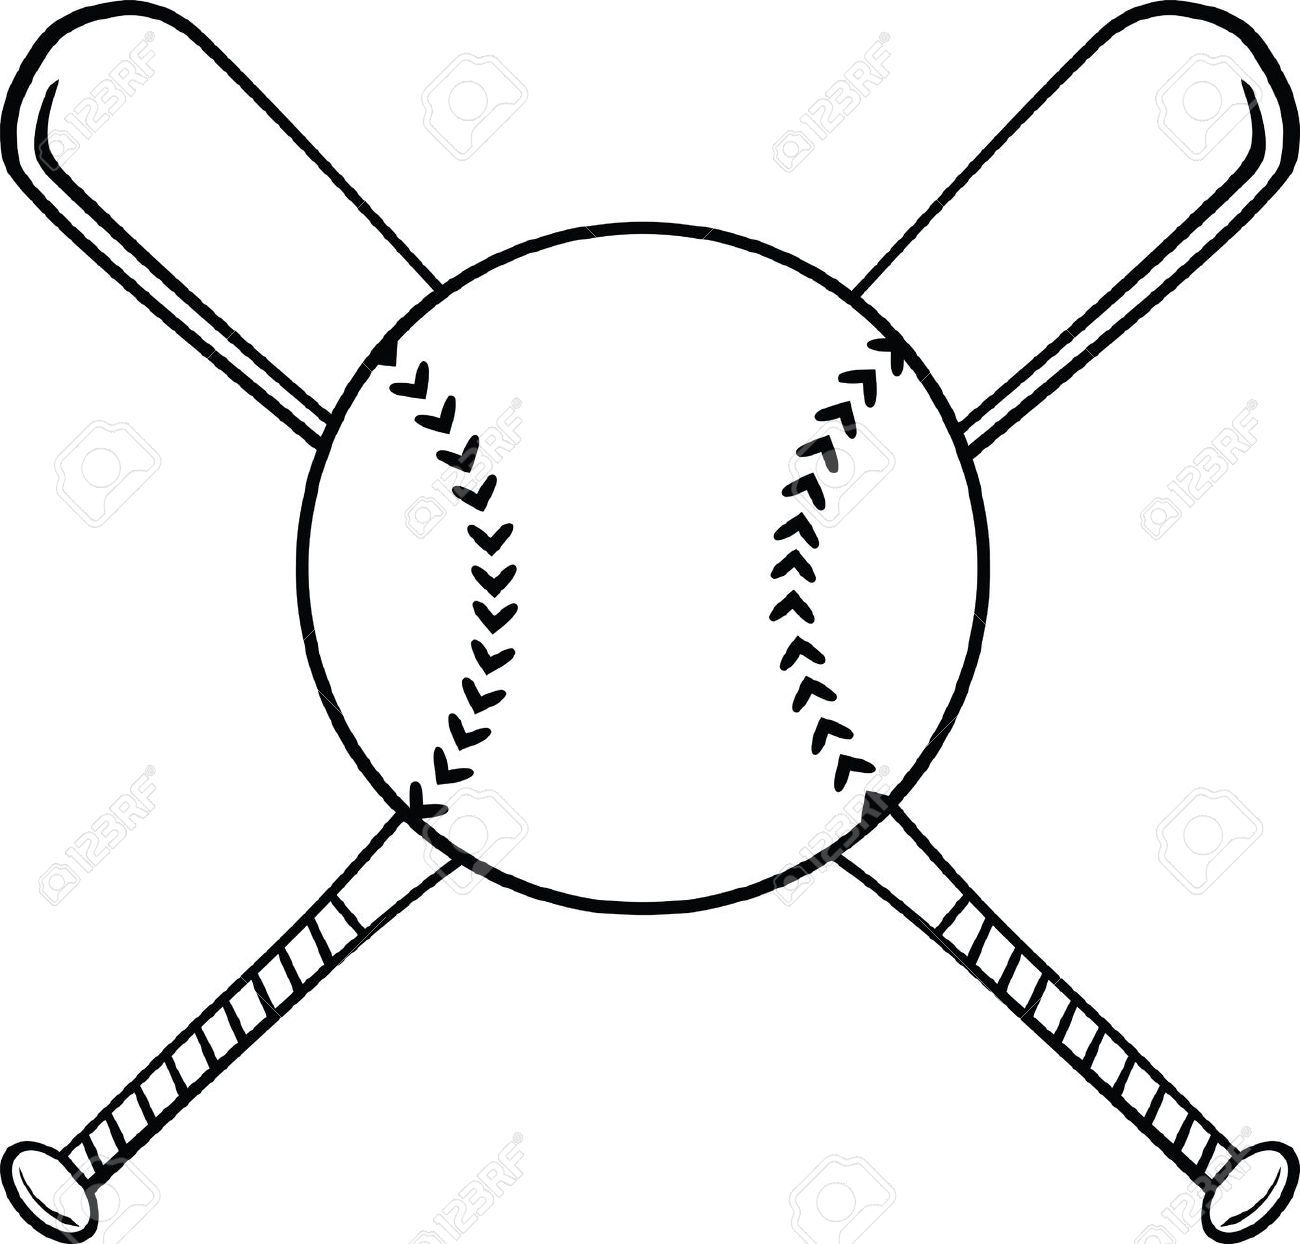 Softball ball and bat clipart